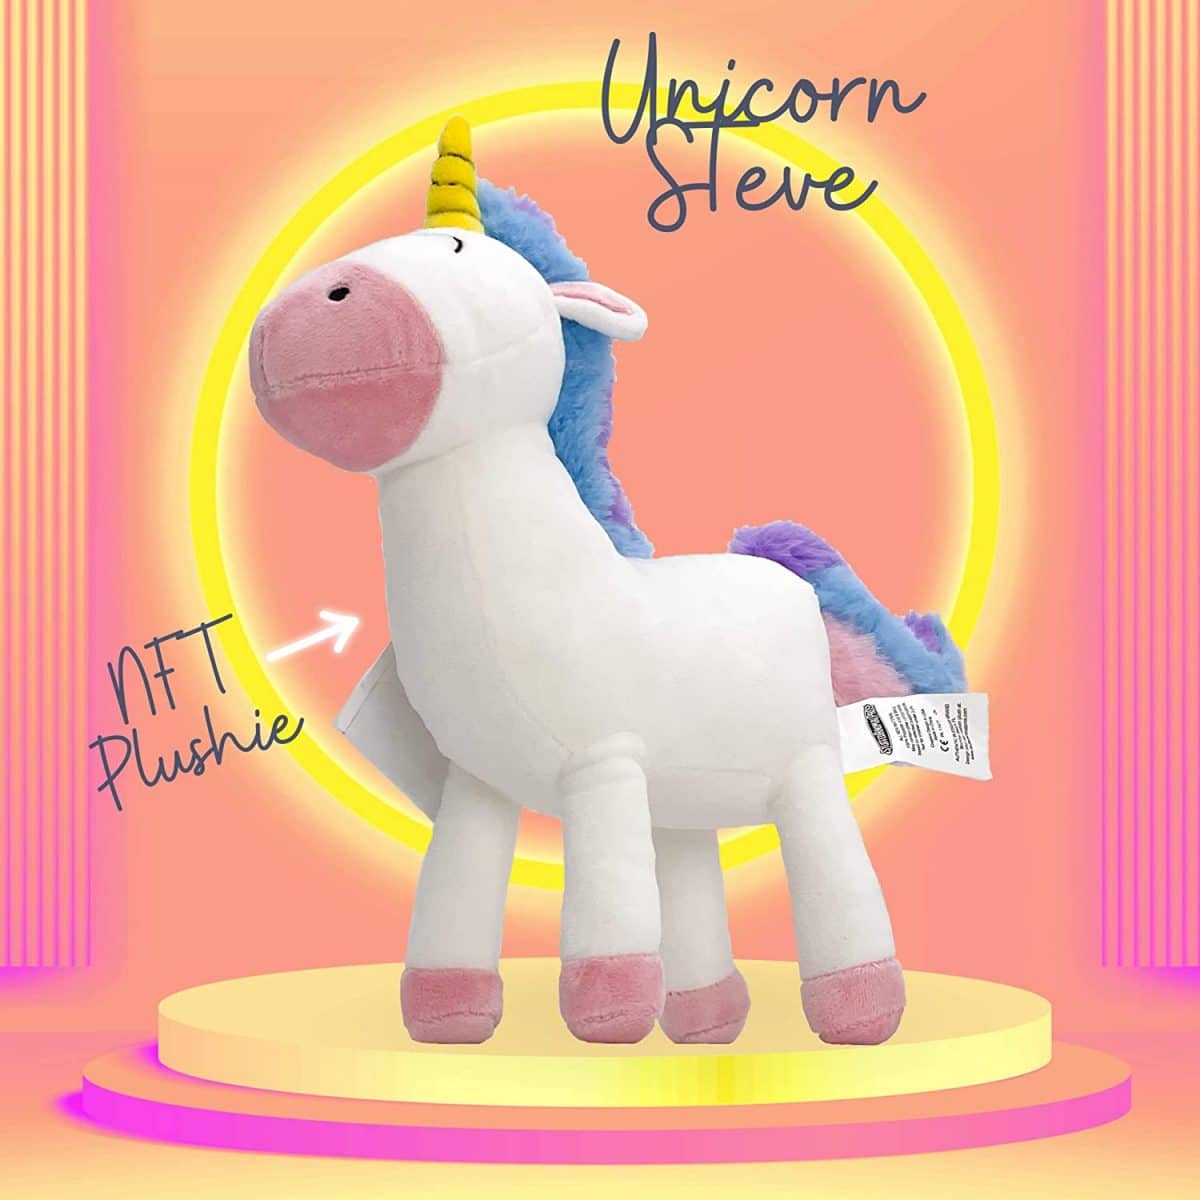 imagen del peluche NFT Unicornio Steve creado por Budsies